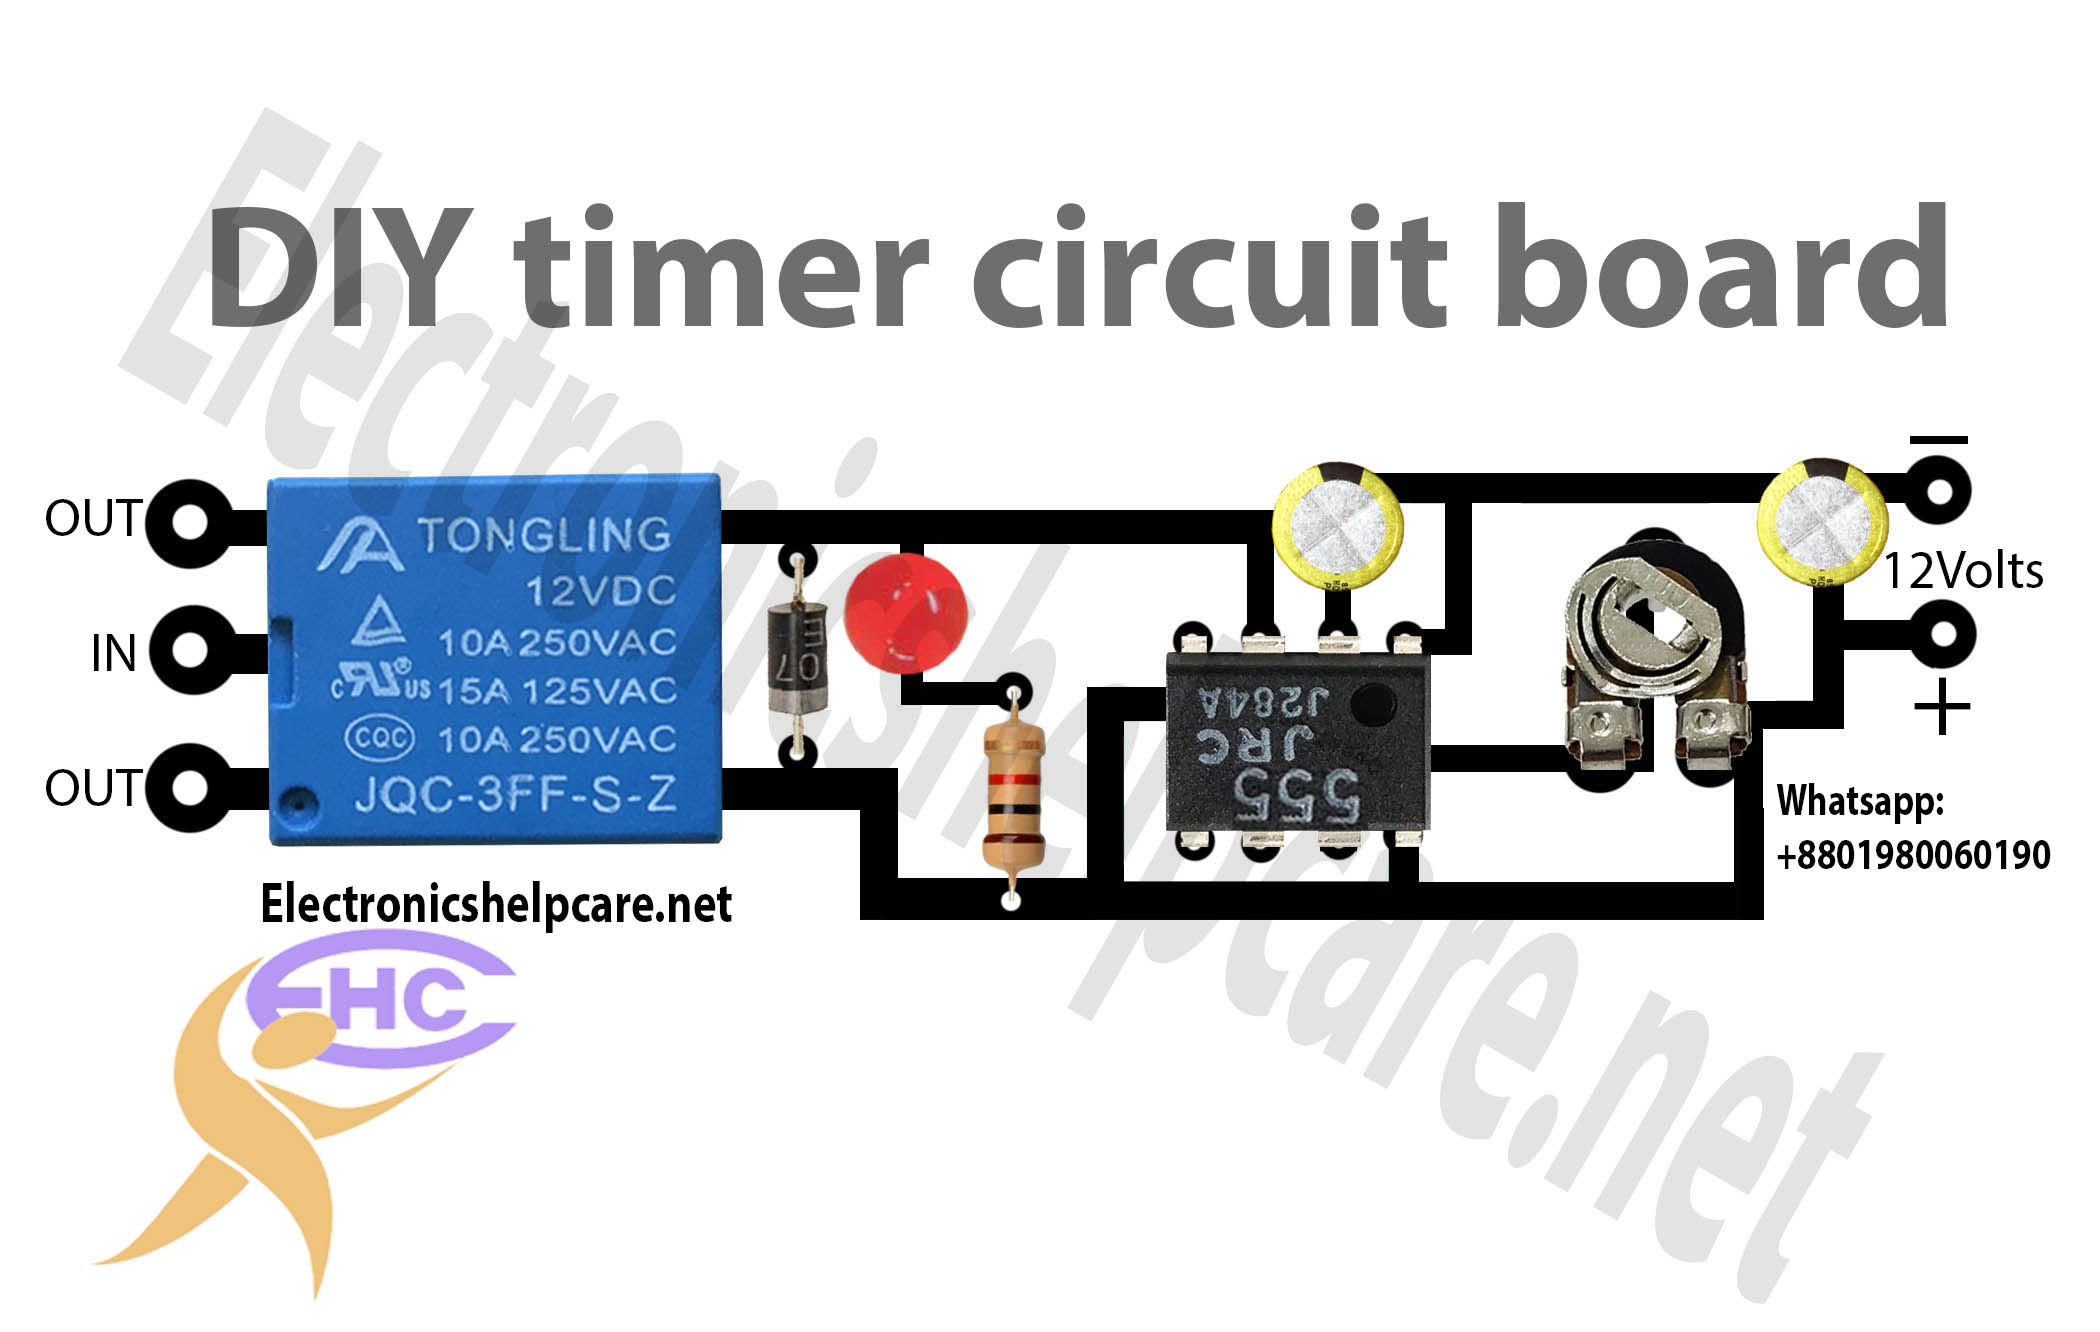 DIY timer circuit board